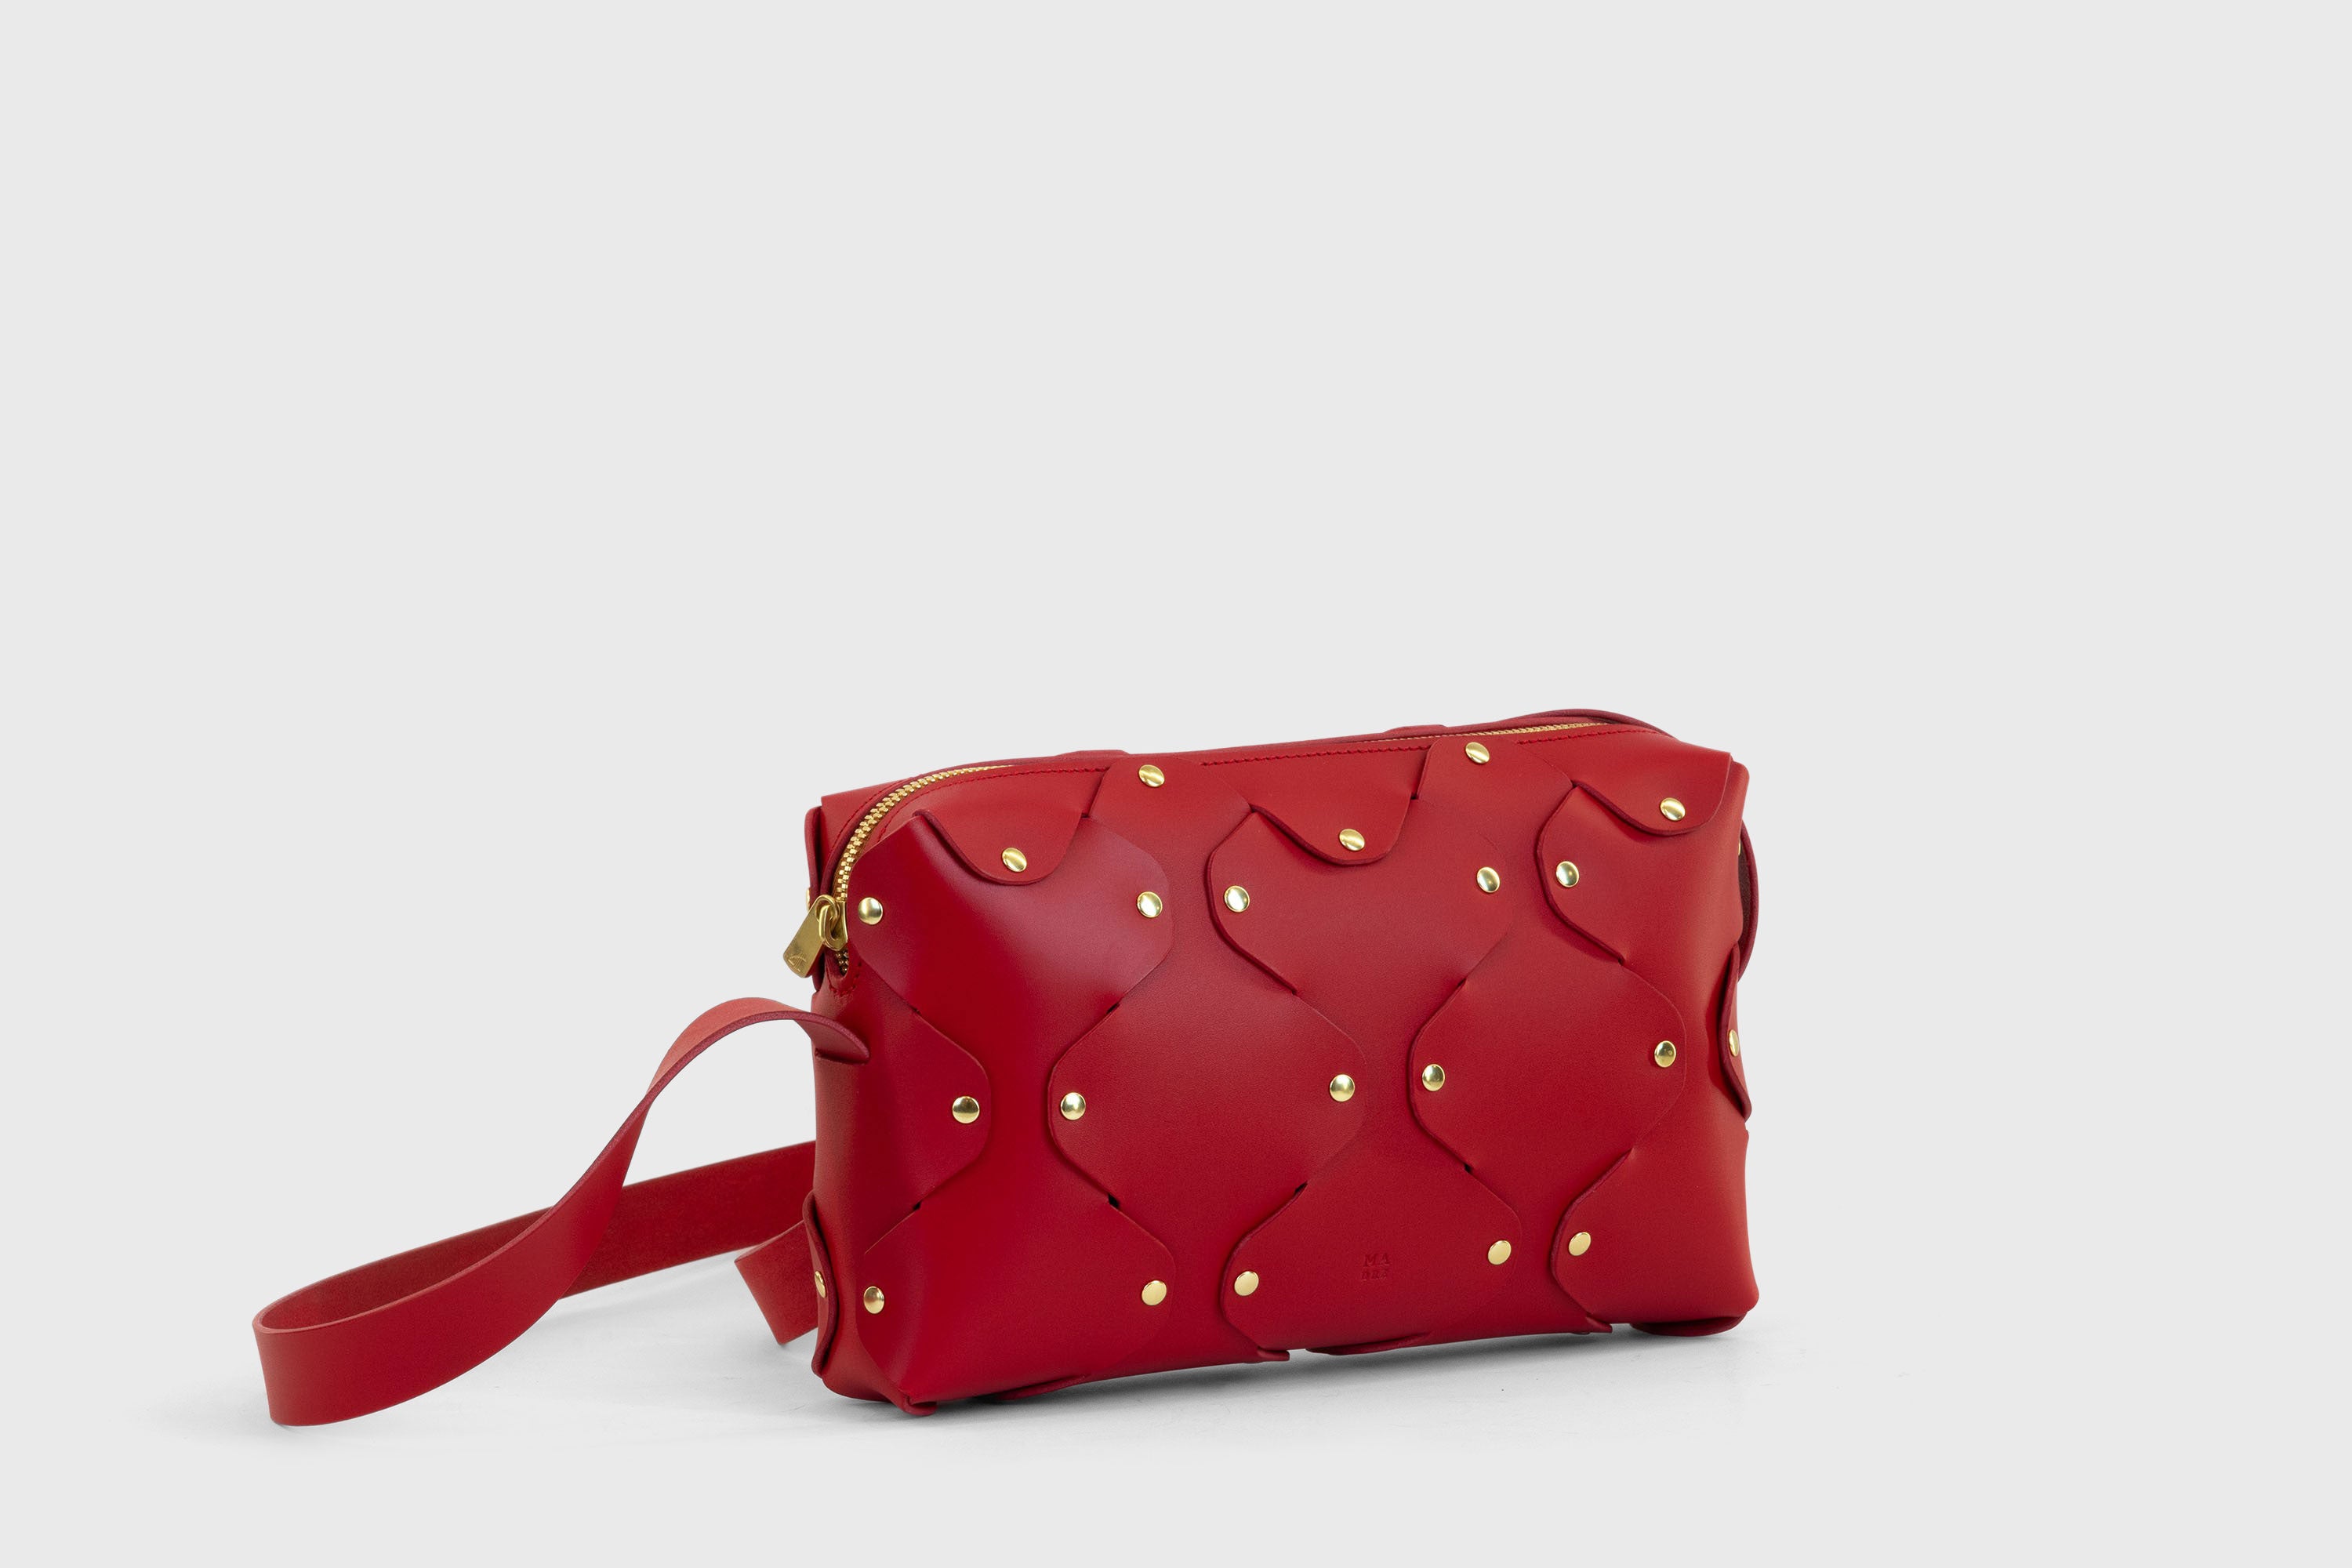 Marlin Leather Bag Red Color Quality Brass Rivet Designer Minimal Square Zipper Pouch Crossbody Handbag Clutch Shoulder Atelier Madre Manuel Dreesmann Barcelona